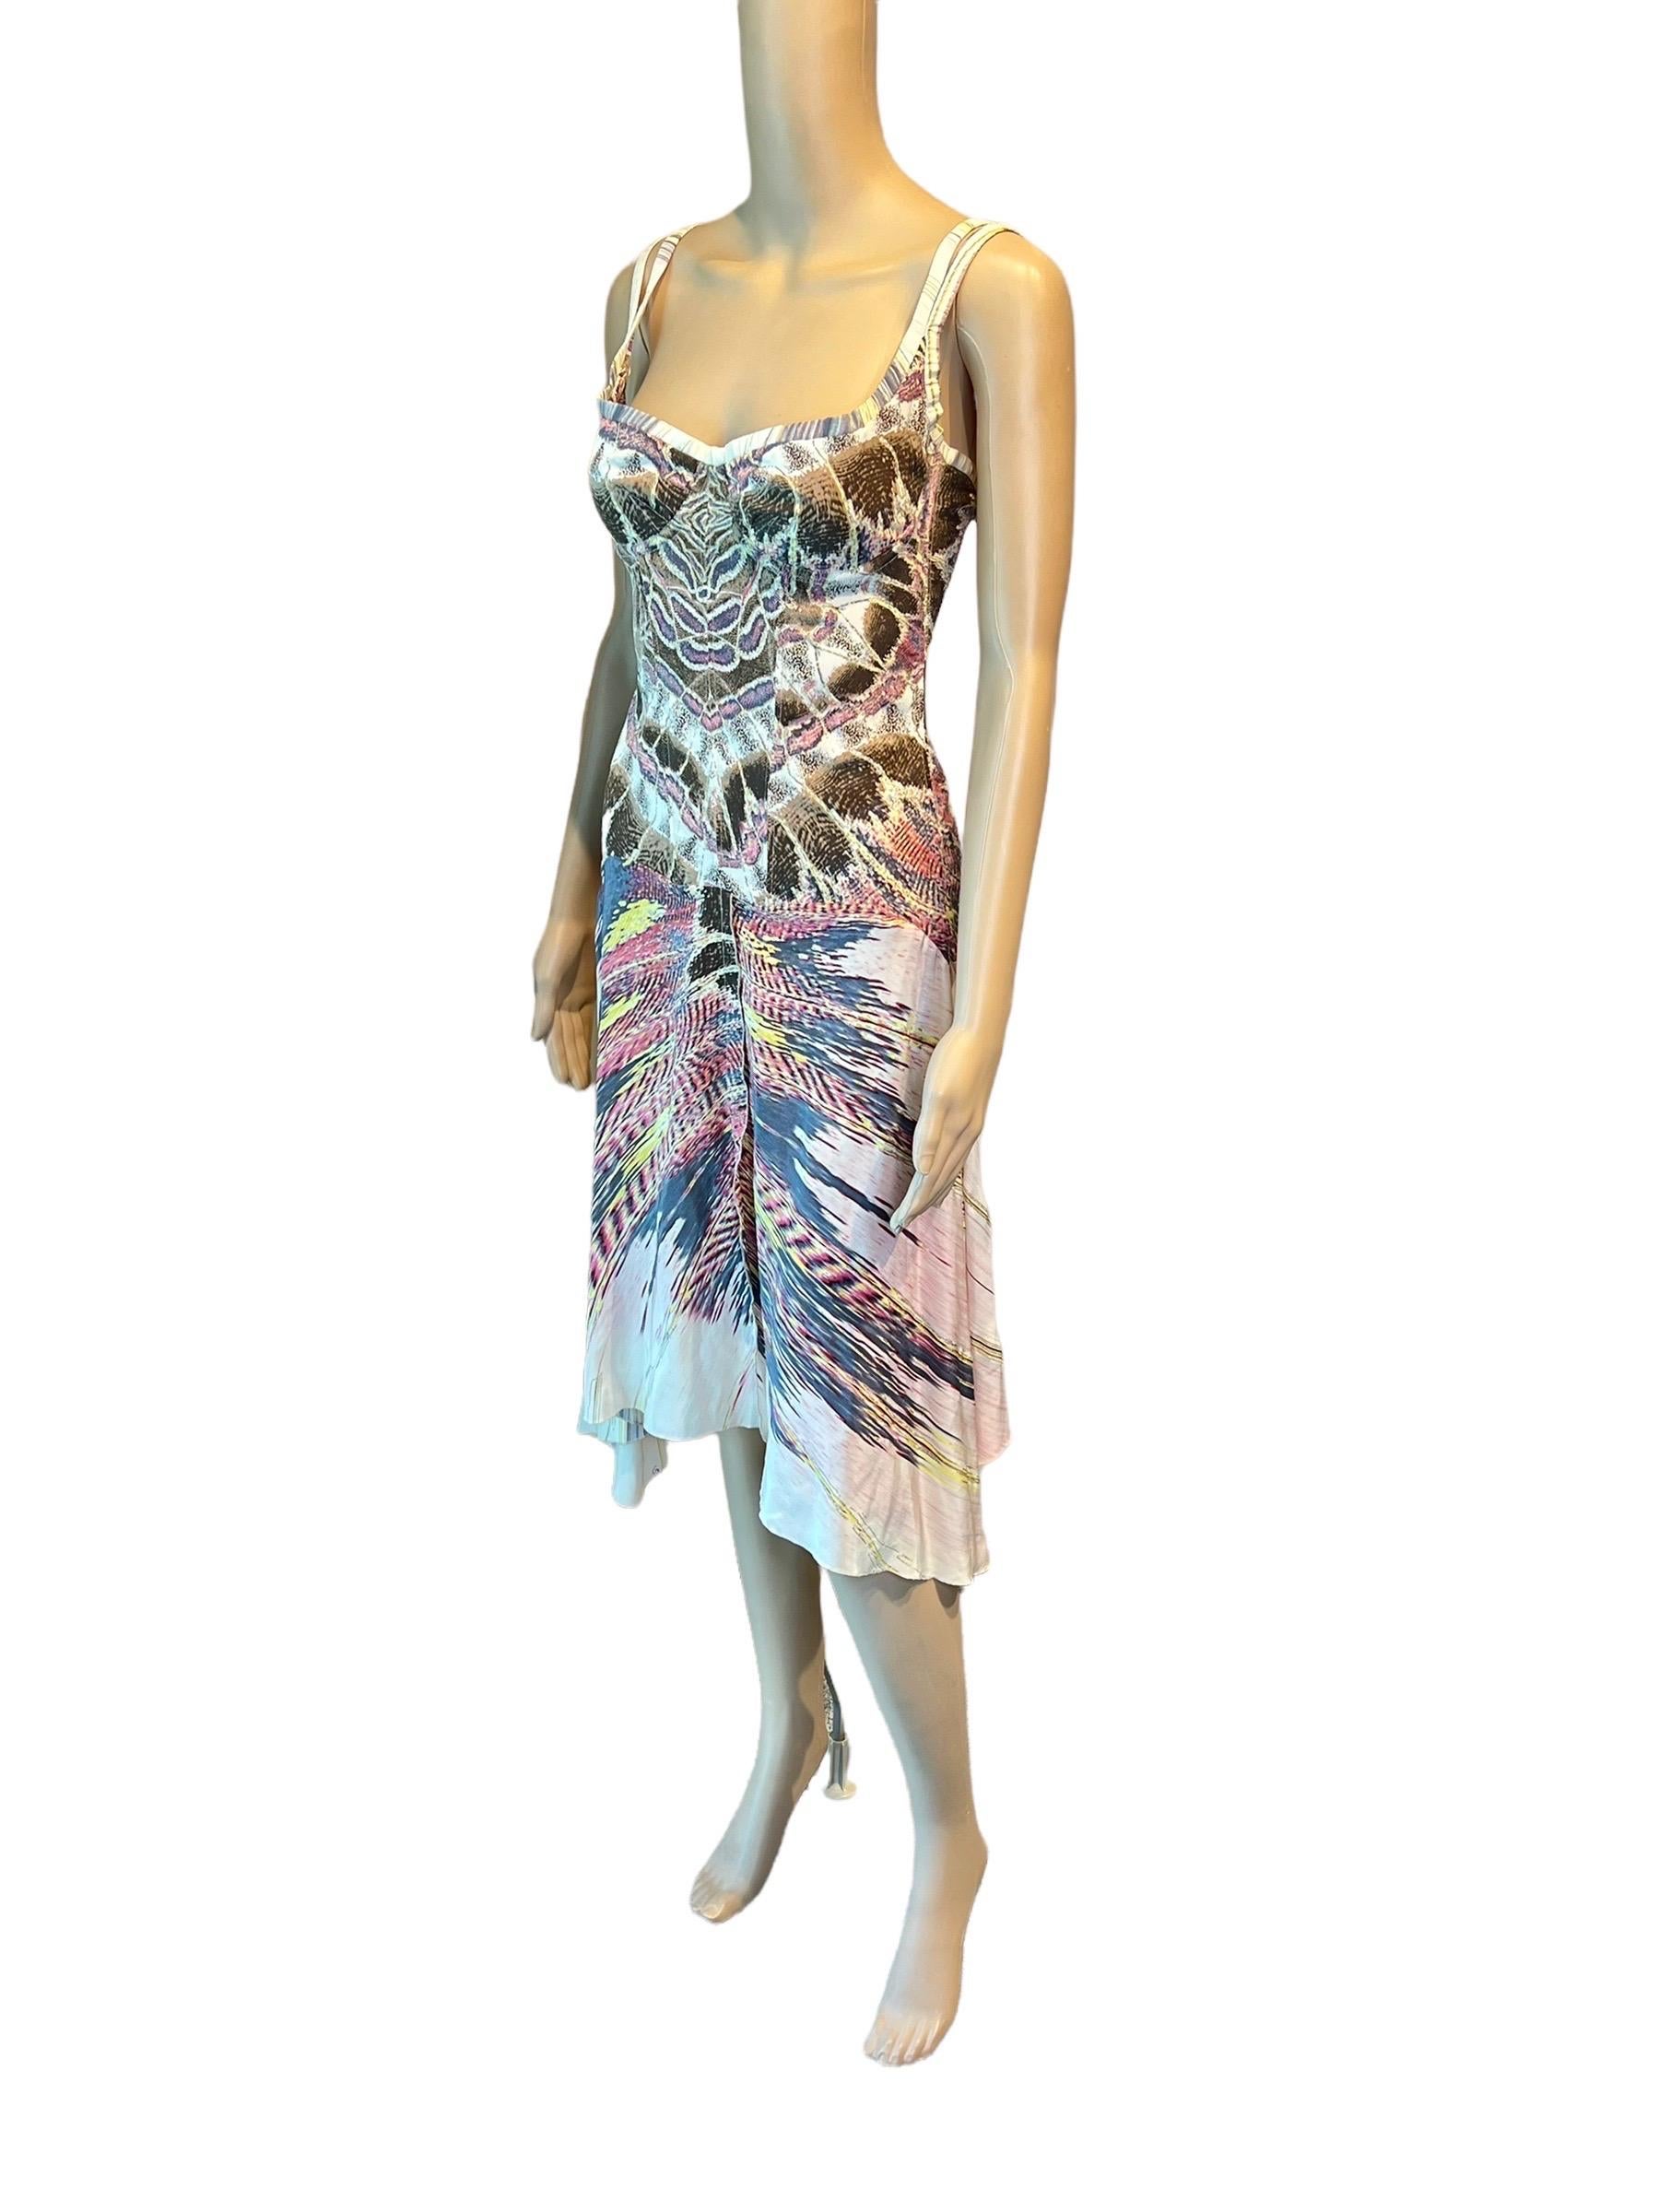 Roberto Cavalli S/S 2004 Bustier Corset Plunging Neckline Feather Print Dress For Sale 3